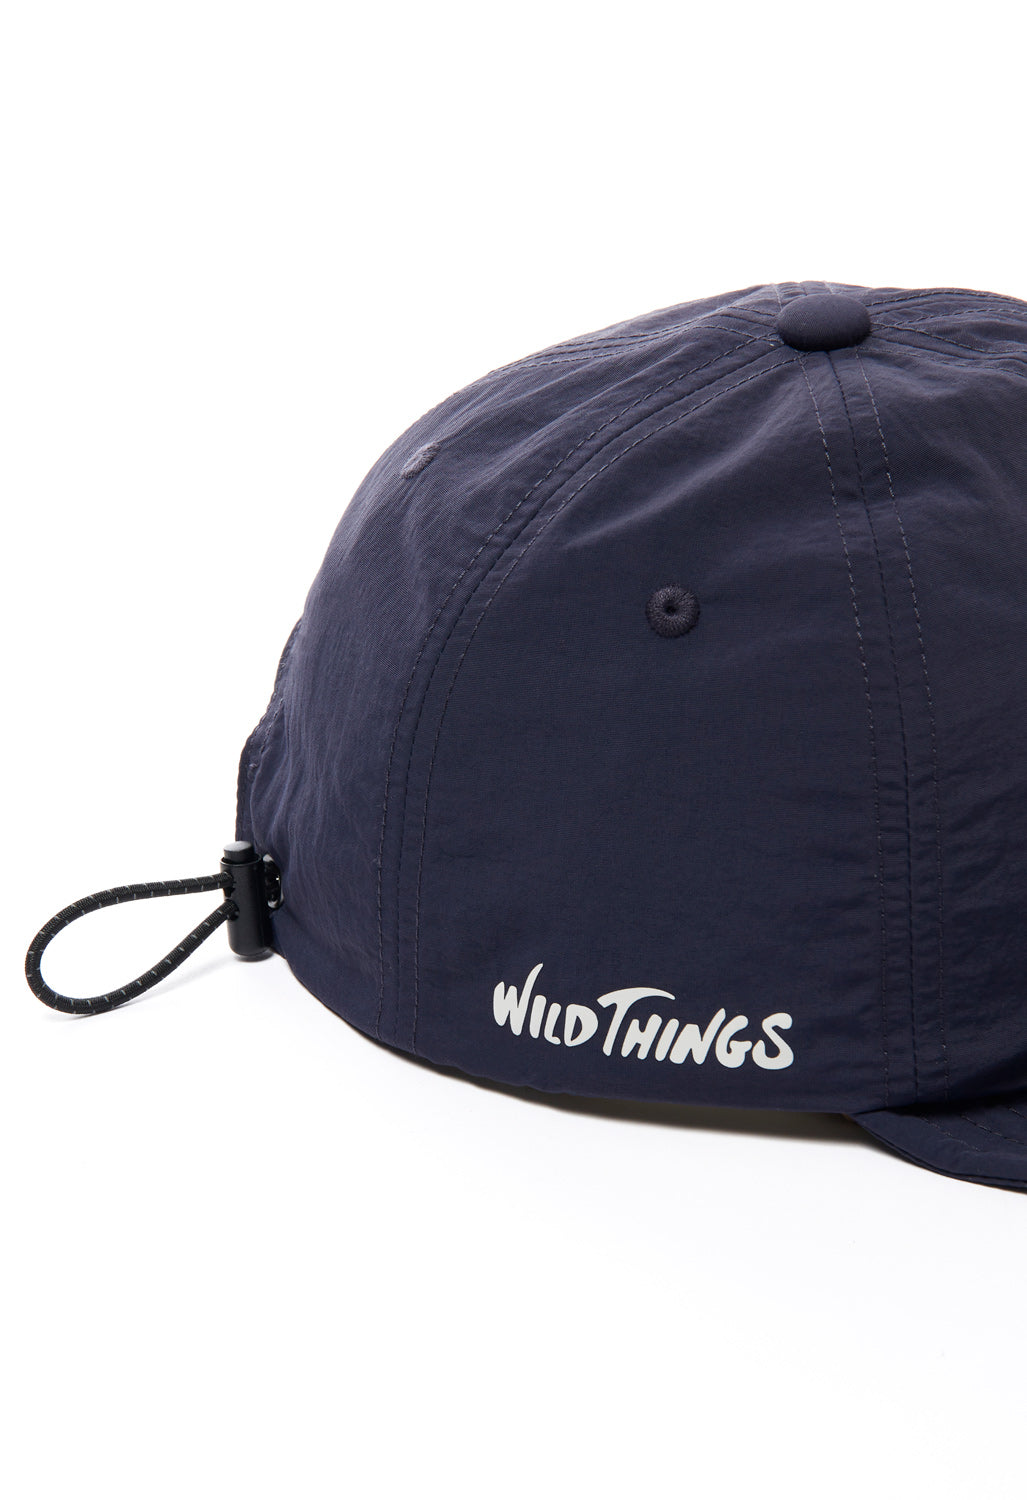 Wild Things Men's Nylon Cap - Navy